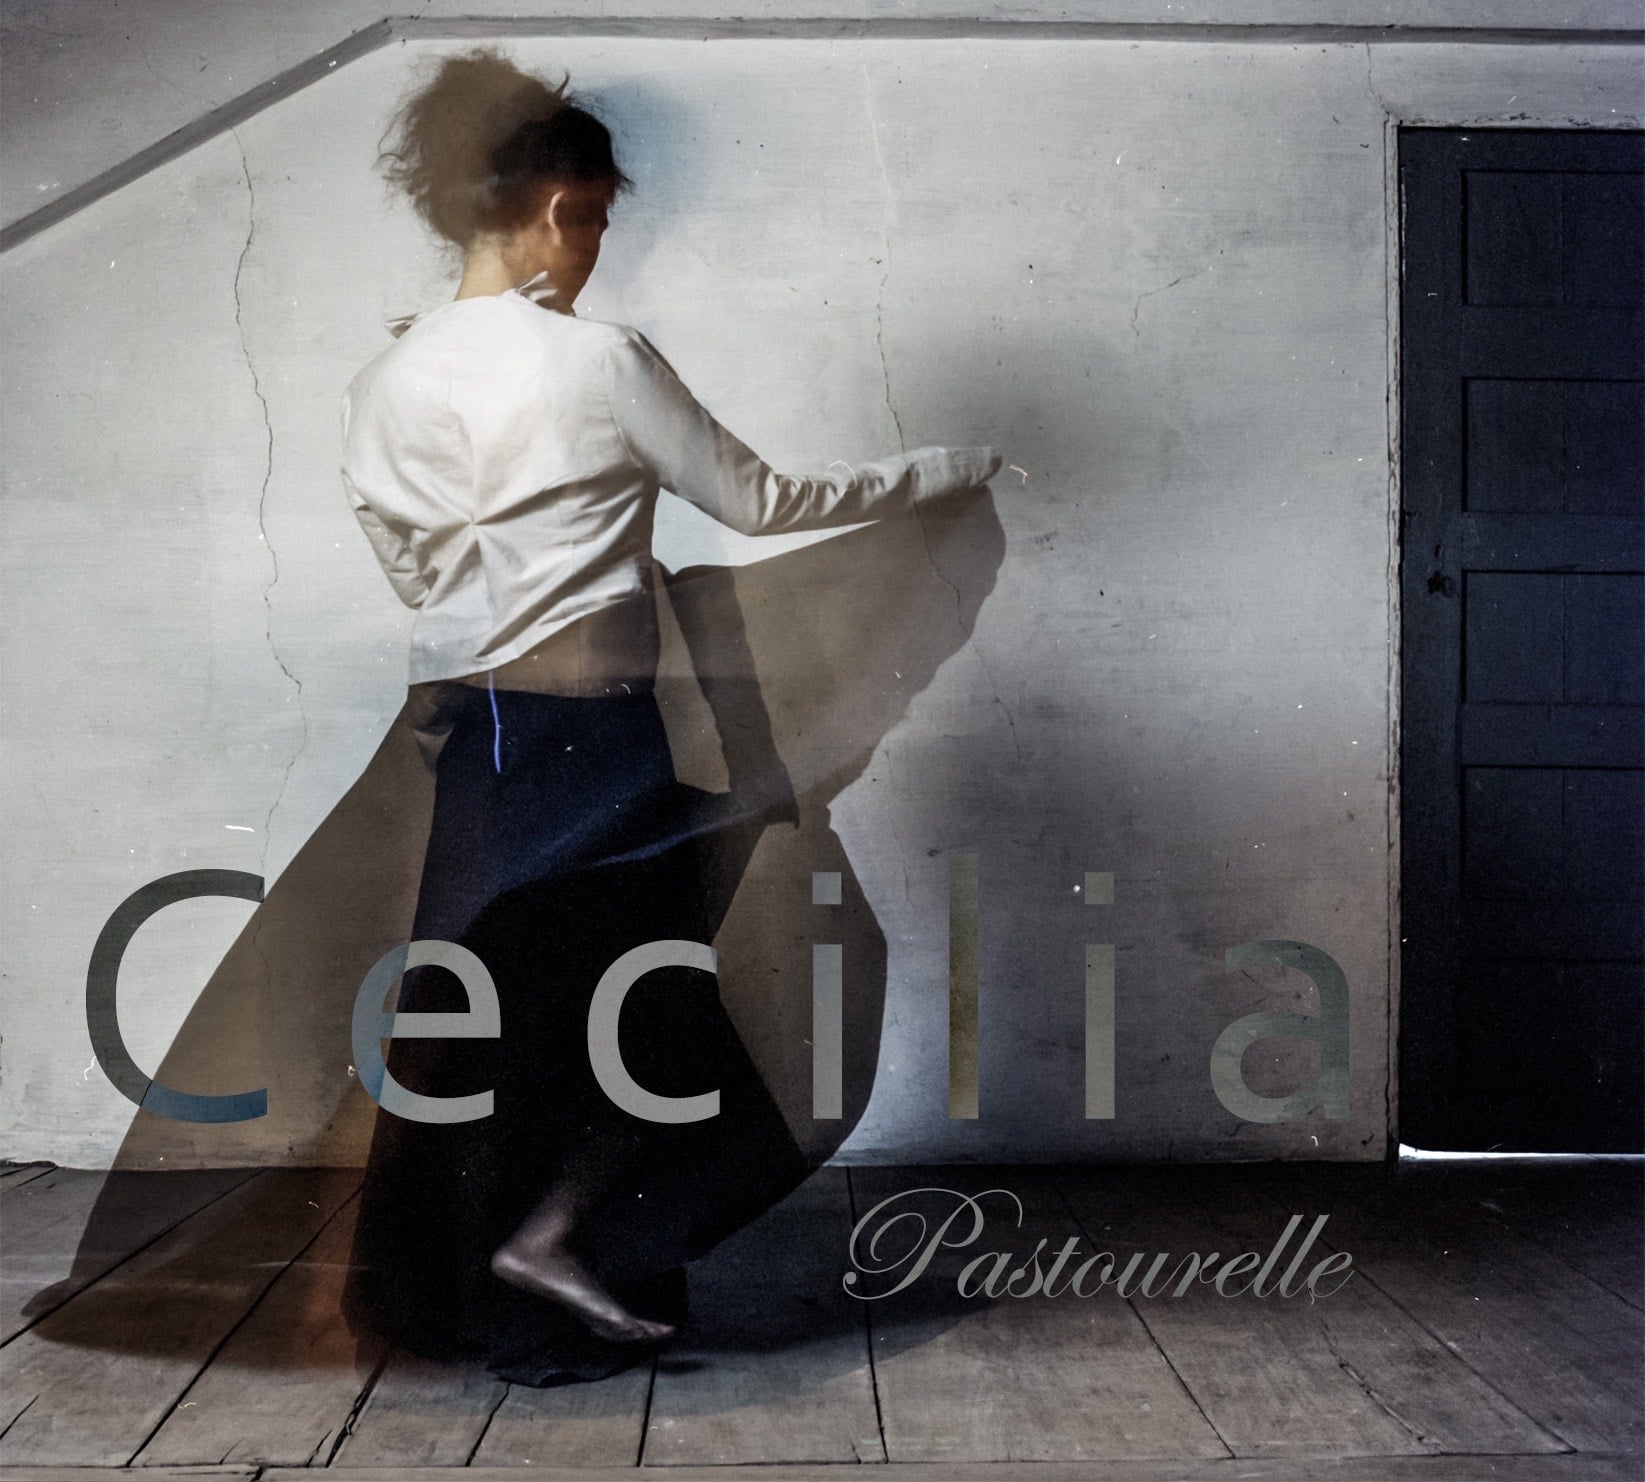 Protected: CD Cecilia Pastourelle